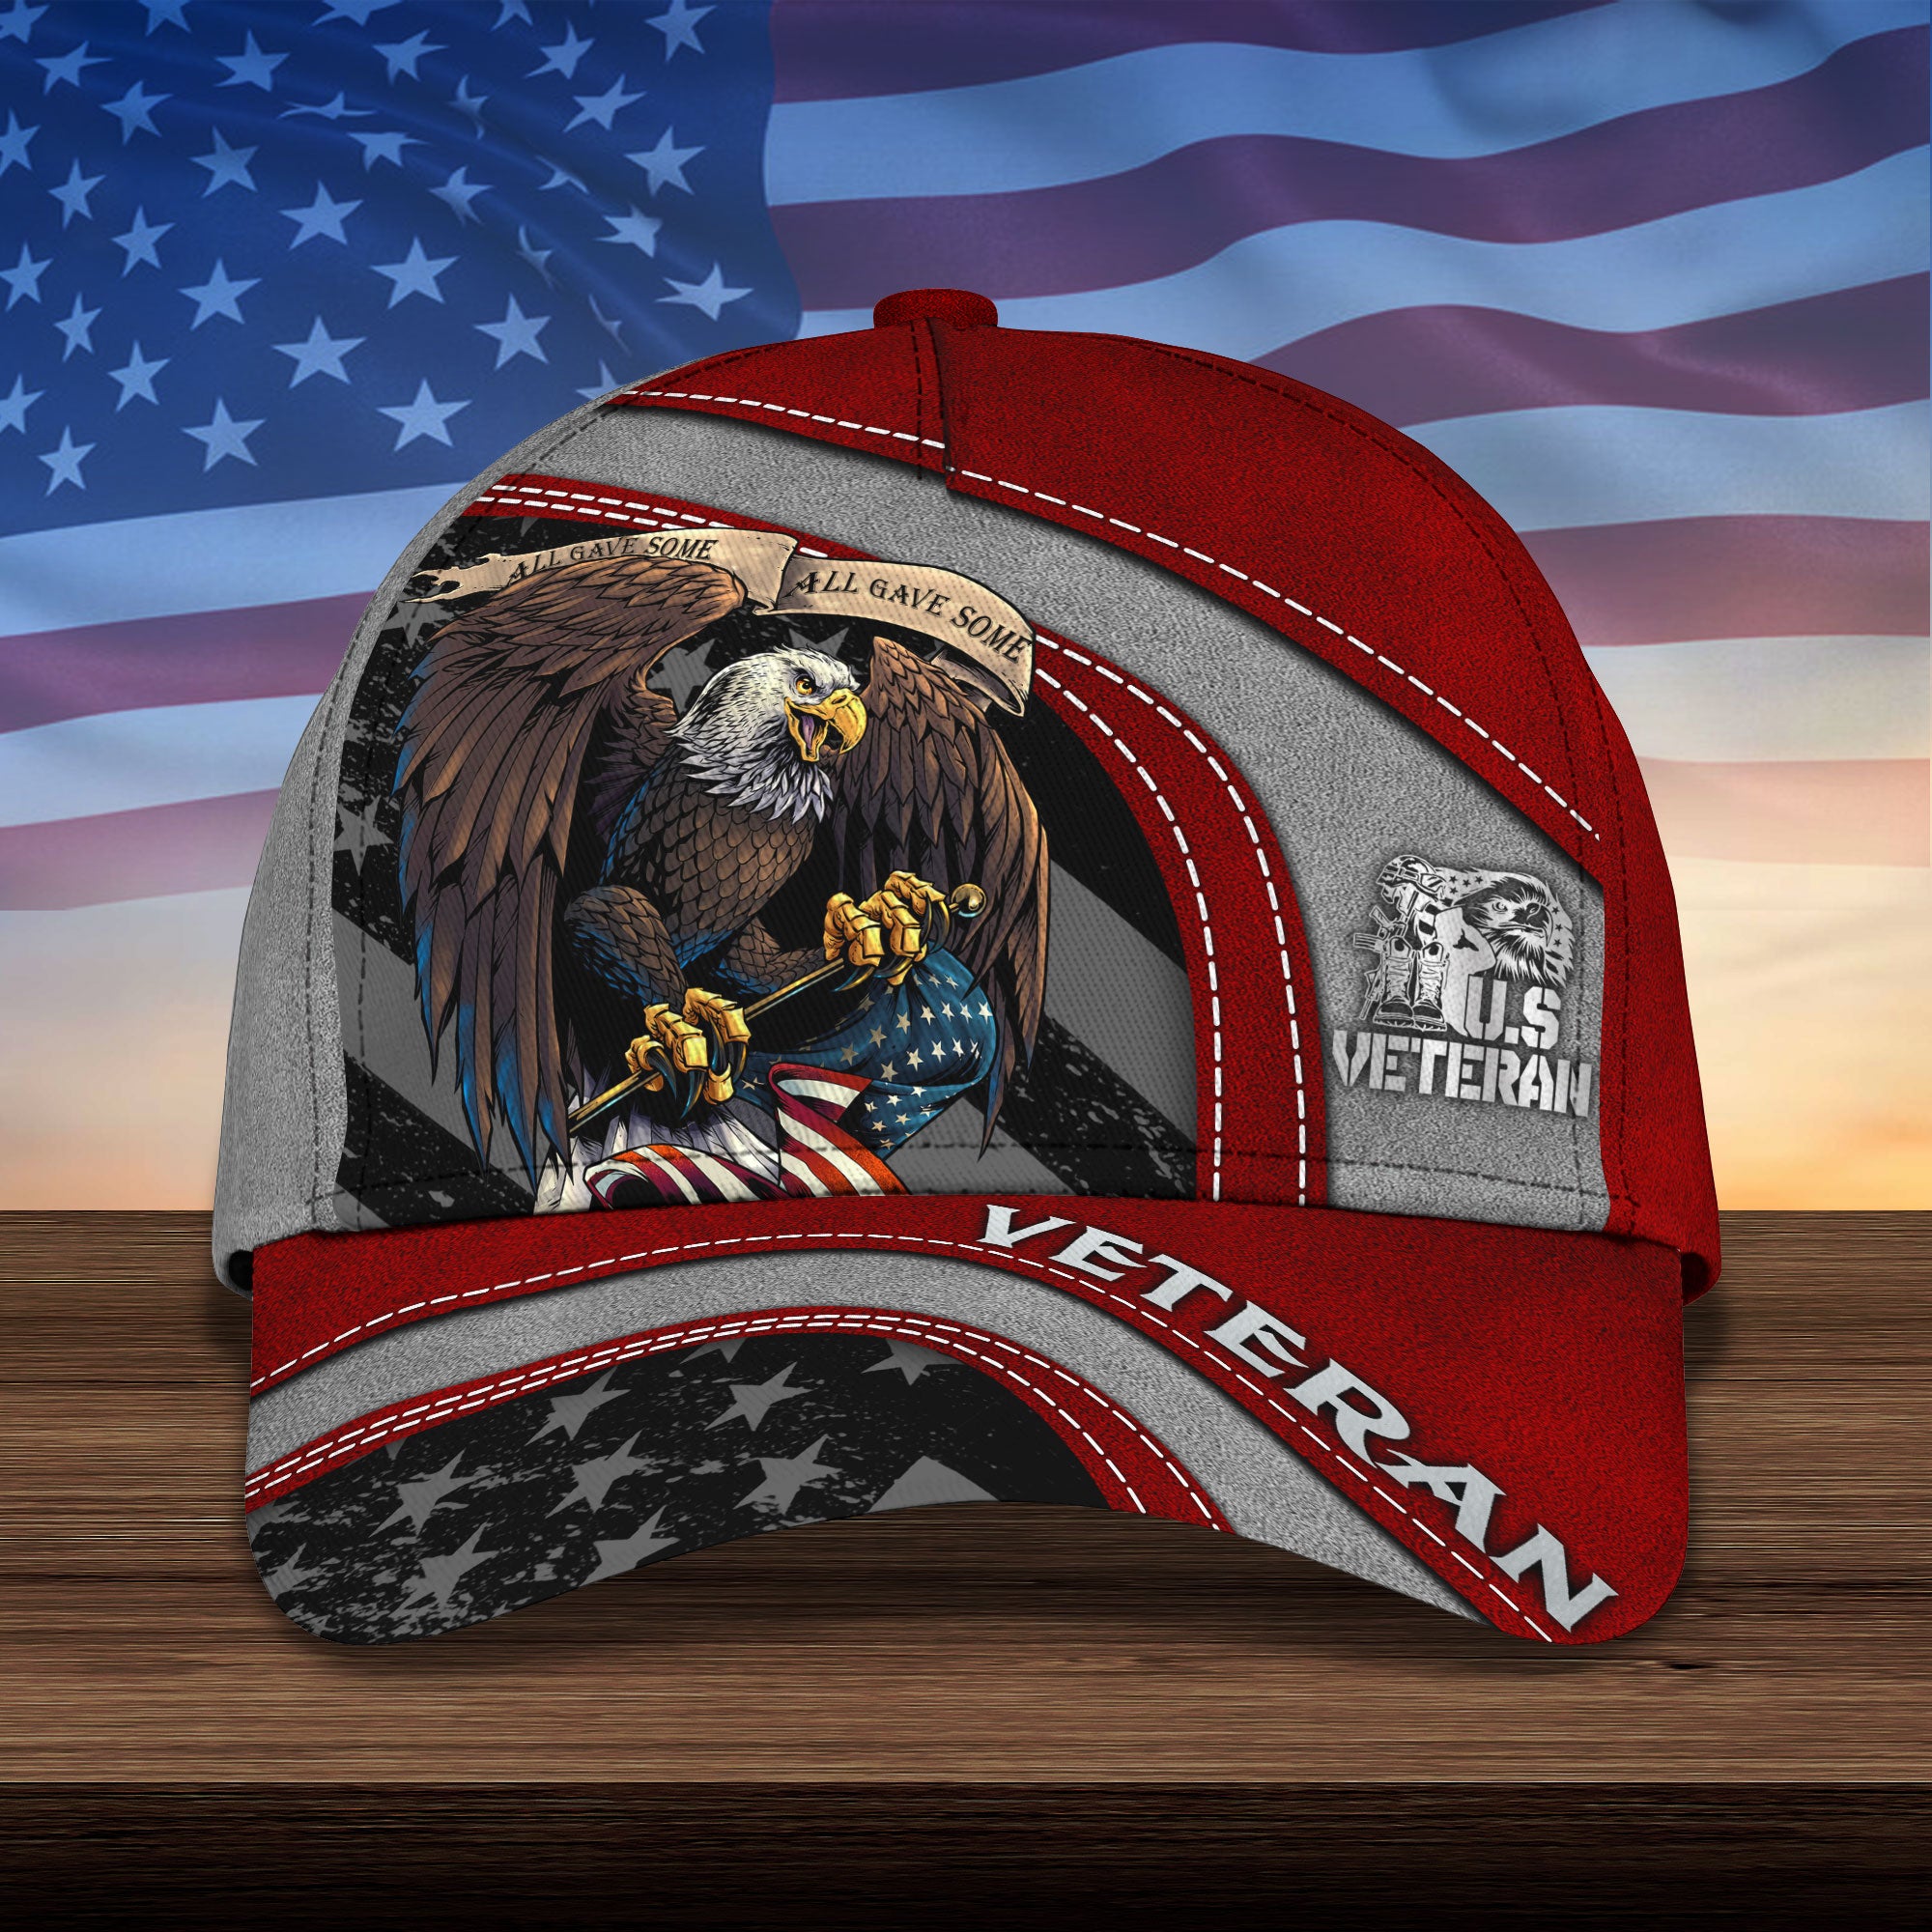 All Gave Some - Customized U.S. Veteran Cap - Gift For Veteran